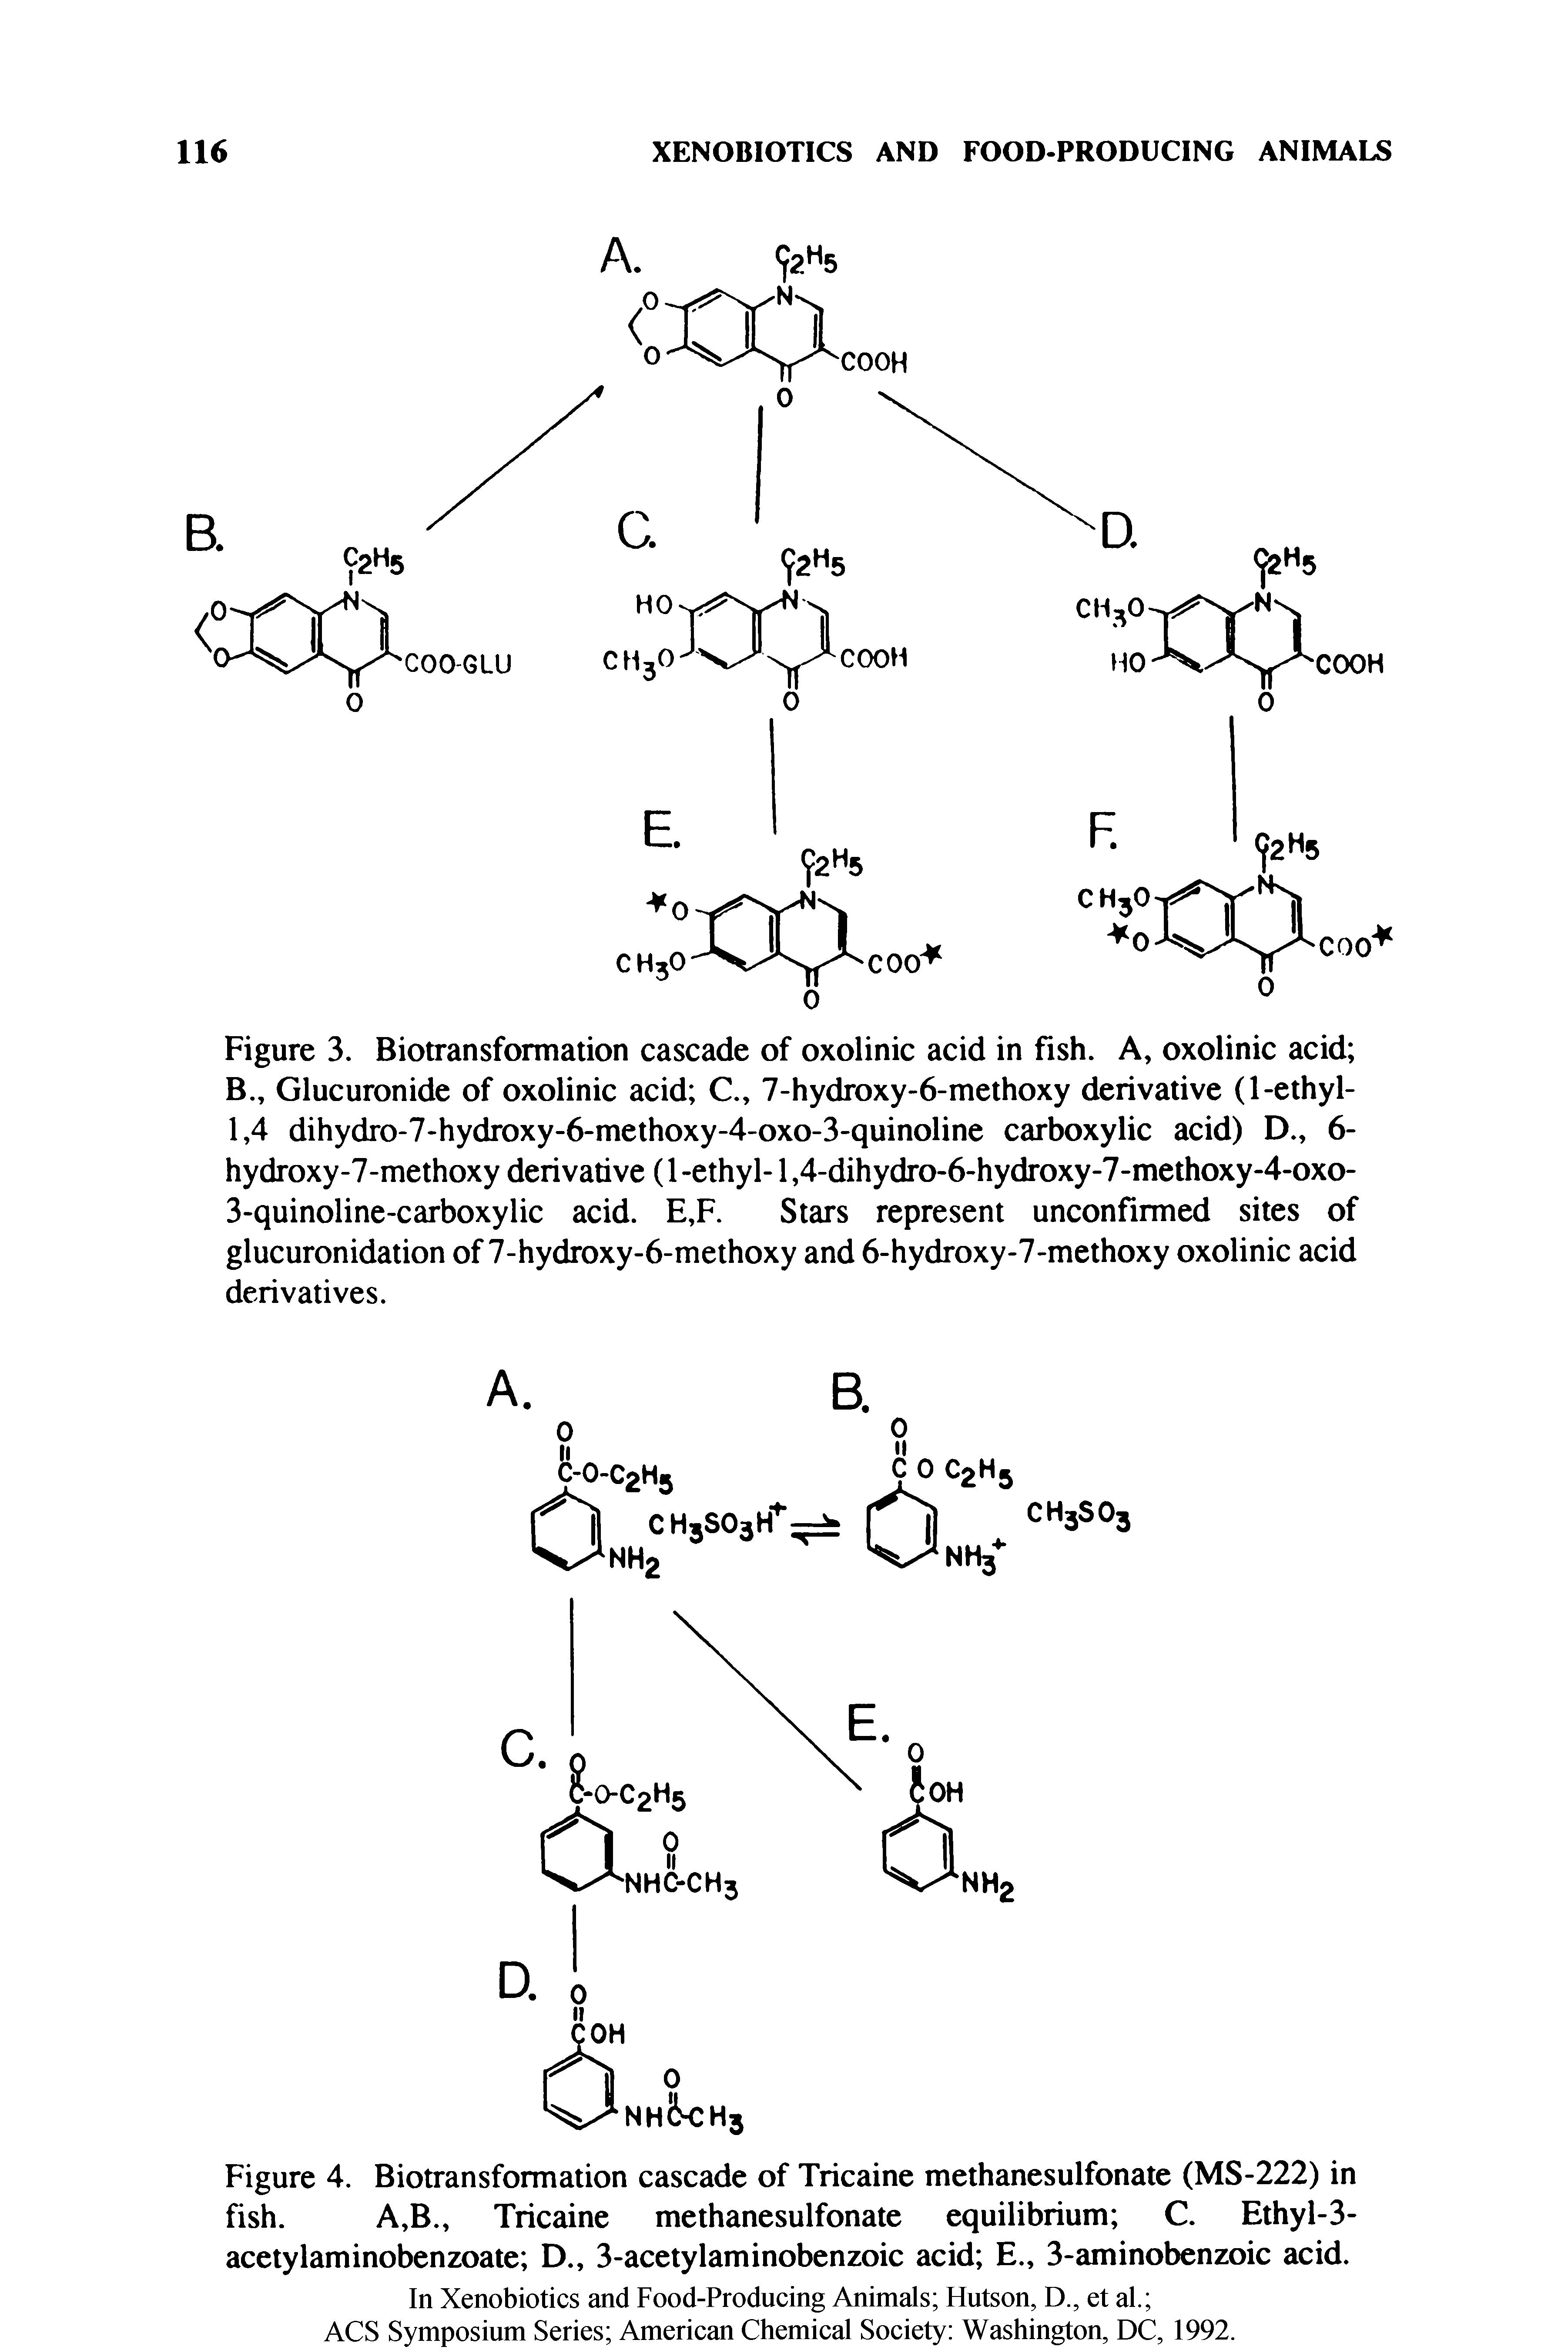 Figure 3. Biotransformation cascade of oxolinic acid in fish. A, oxolinic acid B., Glucuronide of oxolinic acid C., 7-hydroxy-6-methoxy derivative (1-ethyl-1,4 dihydro-7-hydroxy-6-methoxy-4-oxo-3-quinoline carboxylic acid) D., 6-hydroxy-7-methoxy derivative (1 -ethyl-1,4-dihydro-6-hydroxy-7-methoxy-4-oxo-3-quinoline-carboxylic acid. E,F. Stars represent unconfirmed sites of glucuronidation of 7-hydroxy-6-methoxy and 6-hydroxy-7-methoxy oxolinic acid derivatives.